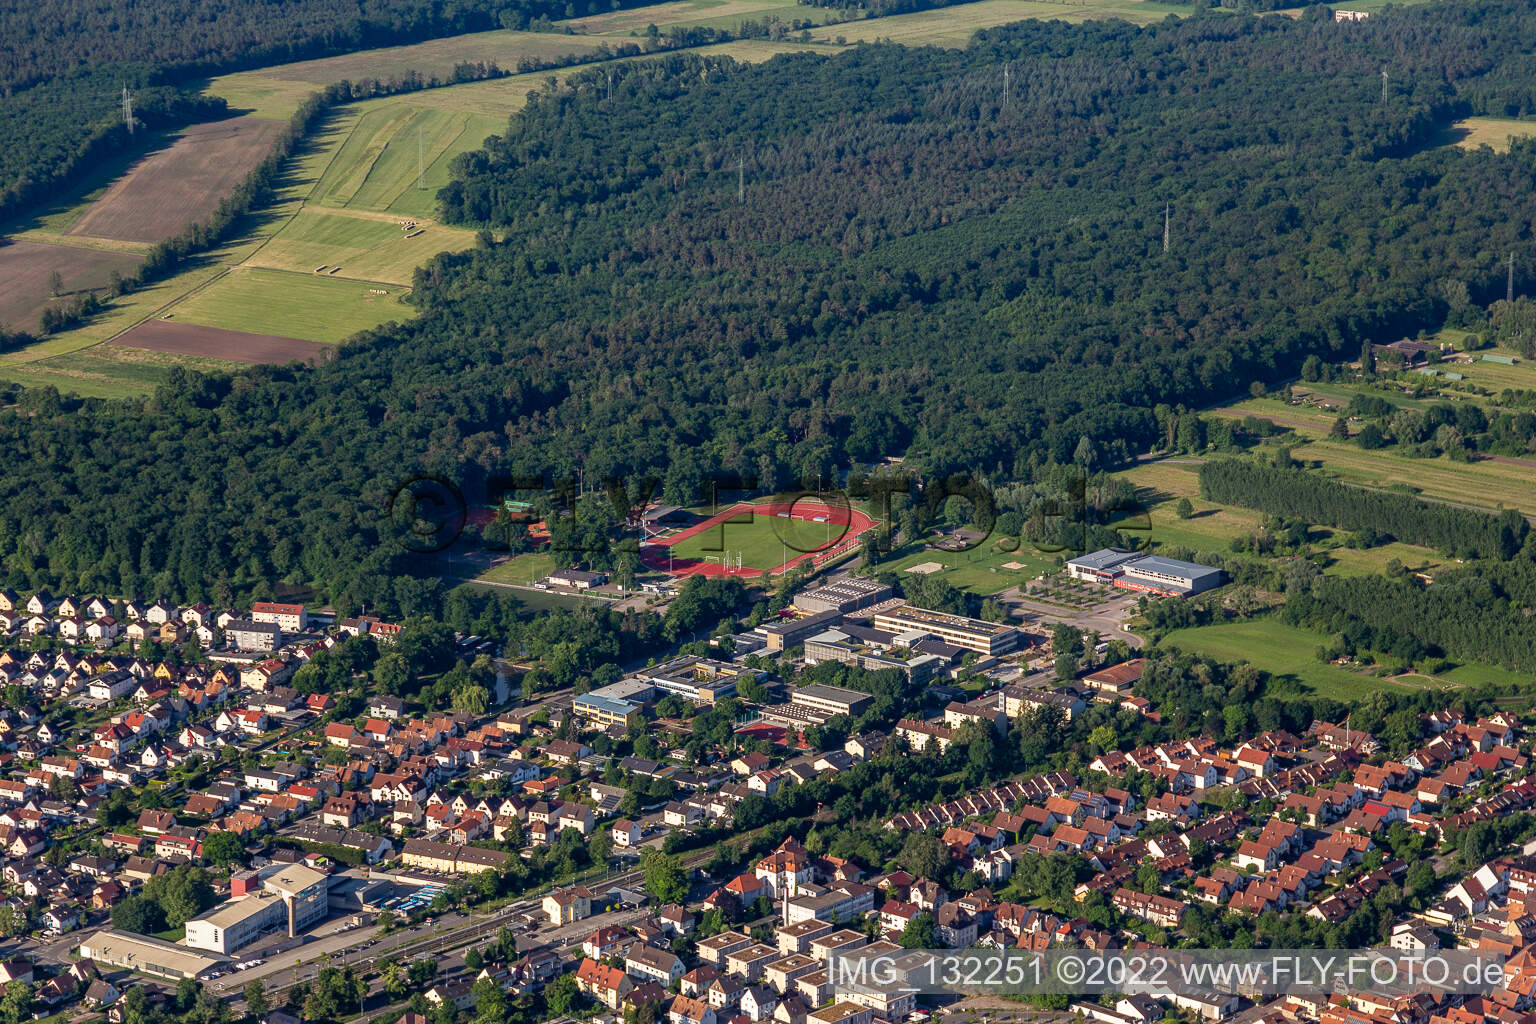 Bienwald Stadium in Kandel in the state Rhineland-Palatinate, Germany